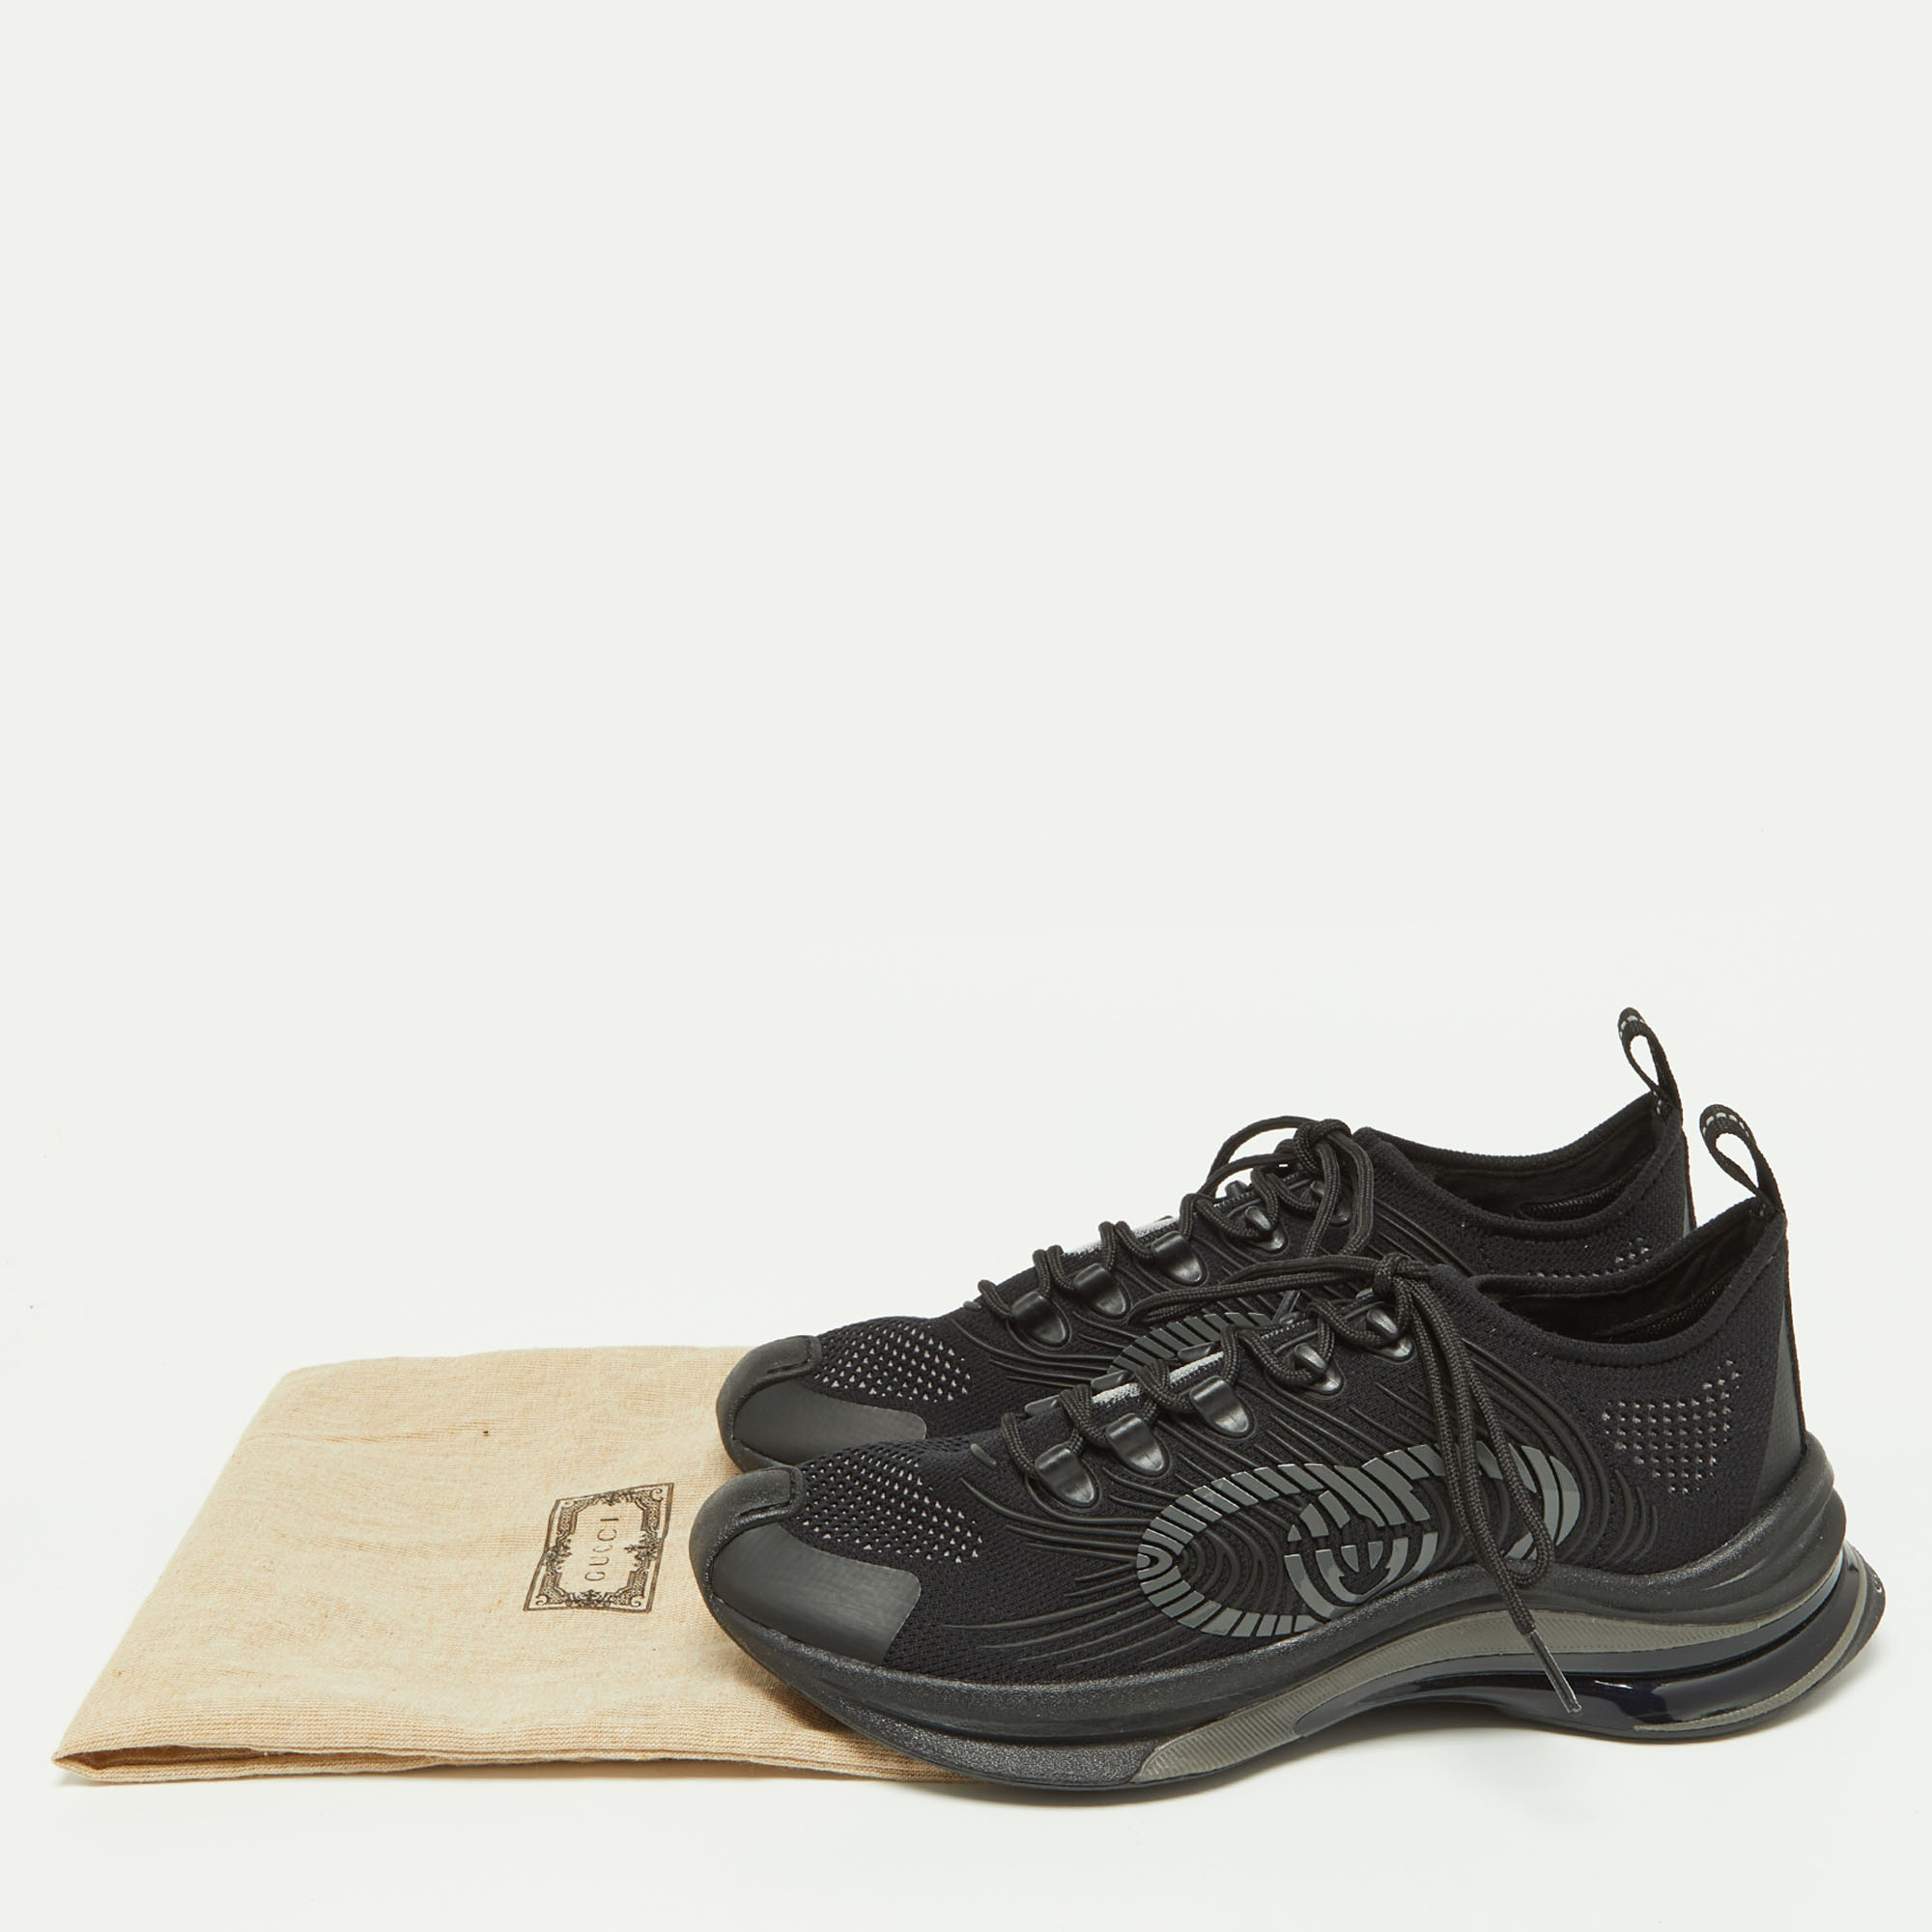 Gucci Black Knit Fabric Run Sneakers Size 39.5